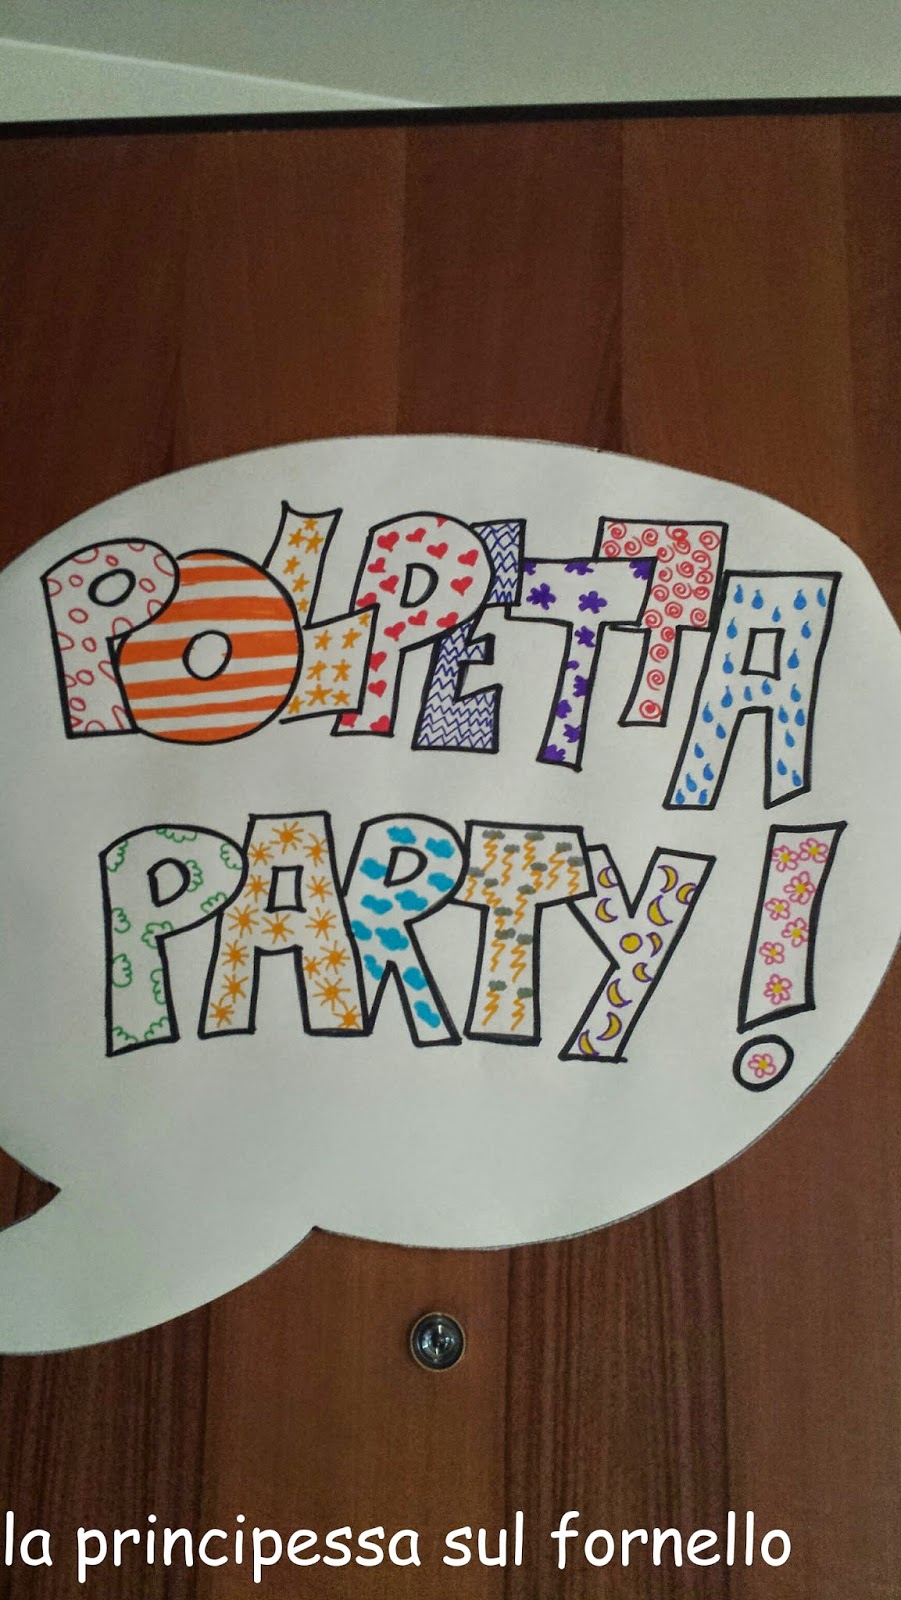 polpetta party!!!